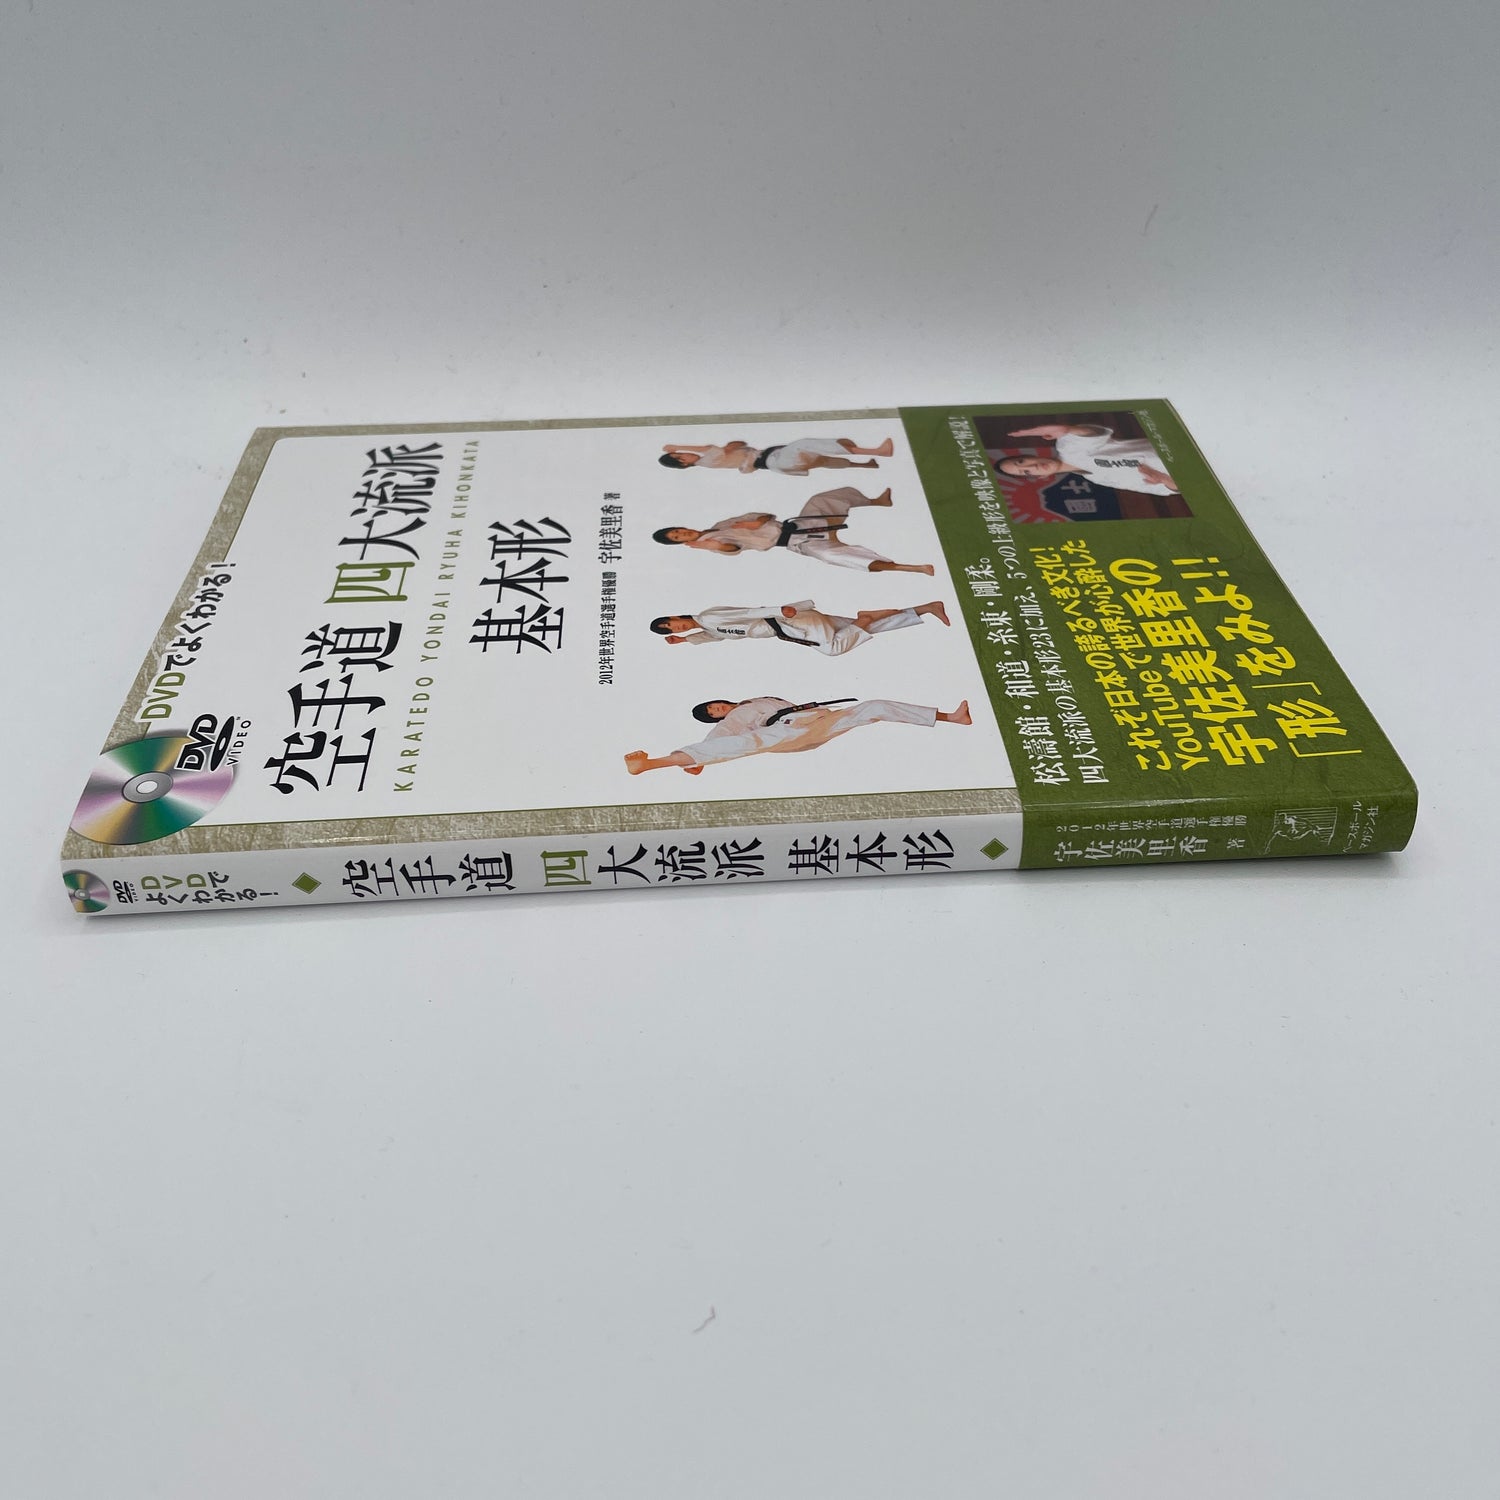 Basic Kata of 4 Major Schools of Karate Book & DVD by Rika Usami